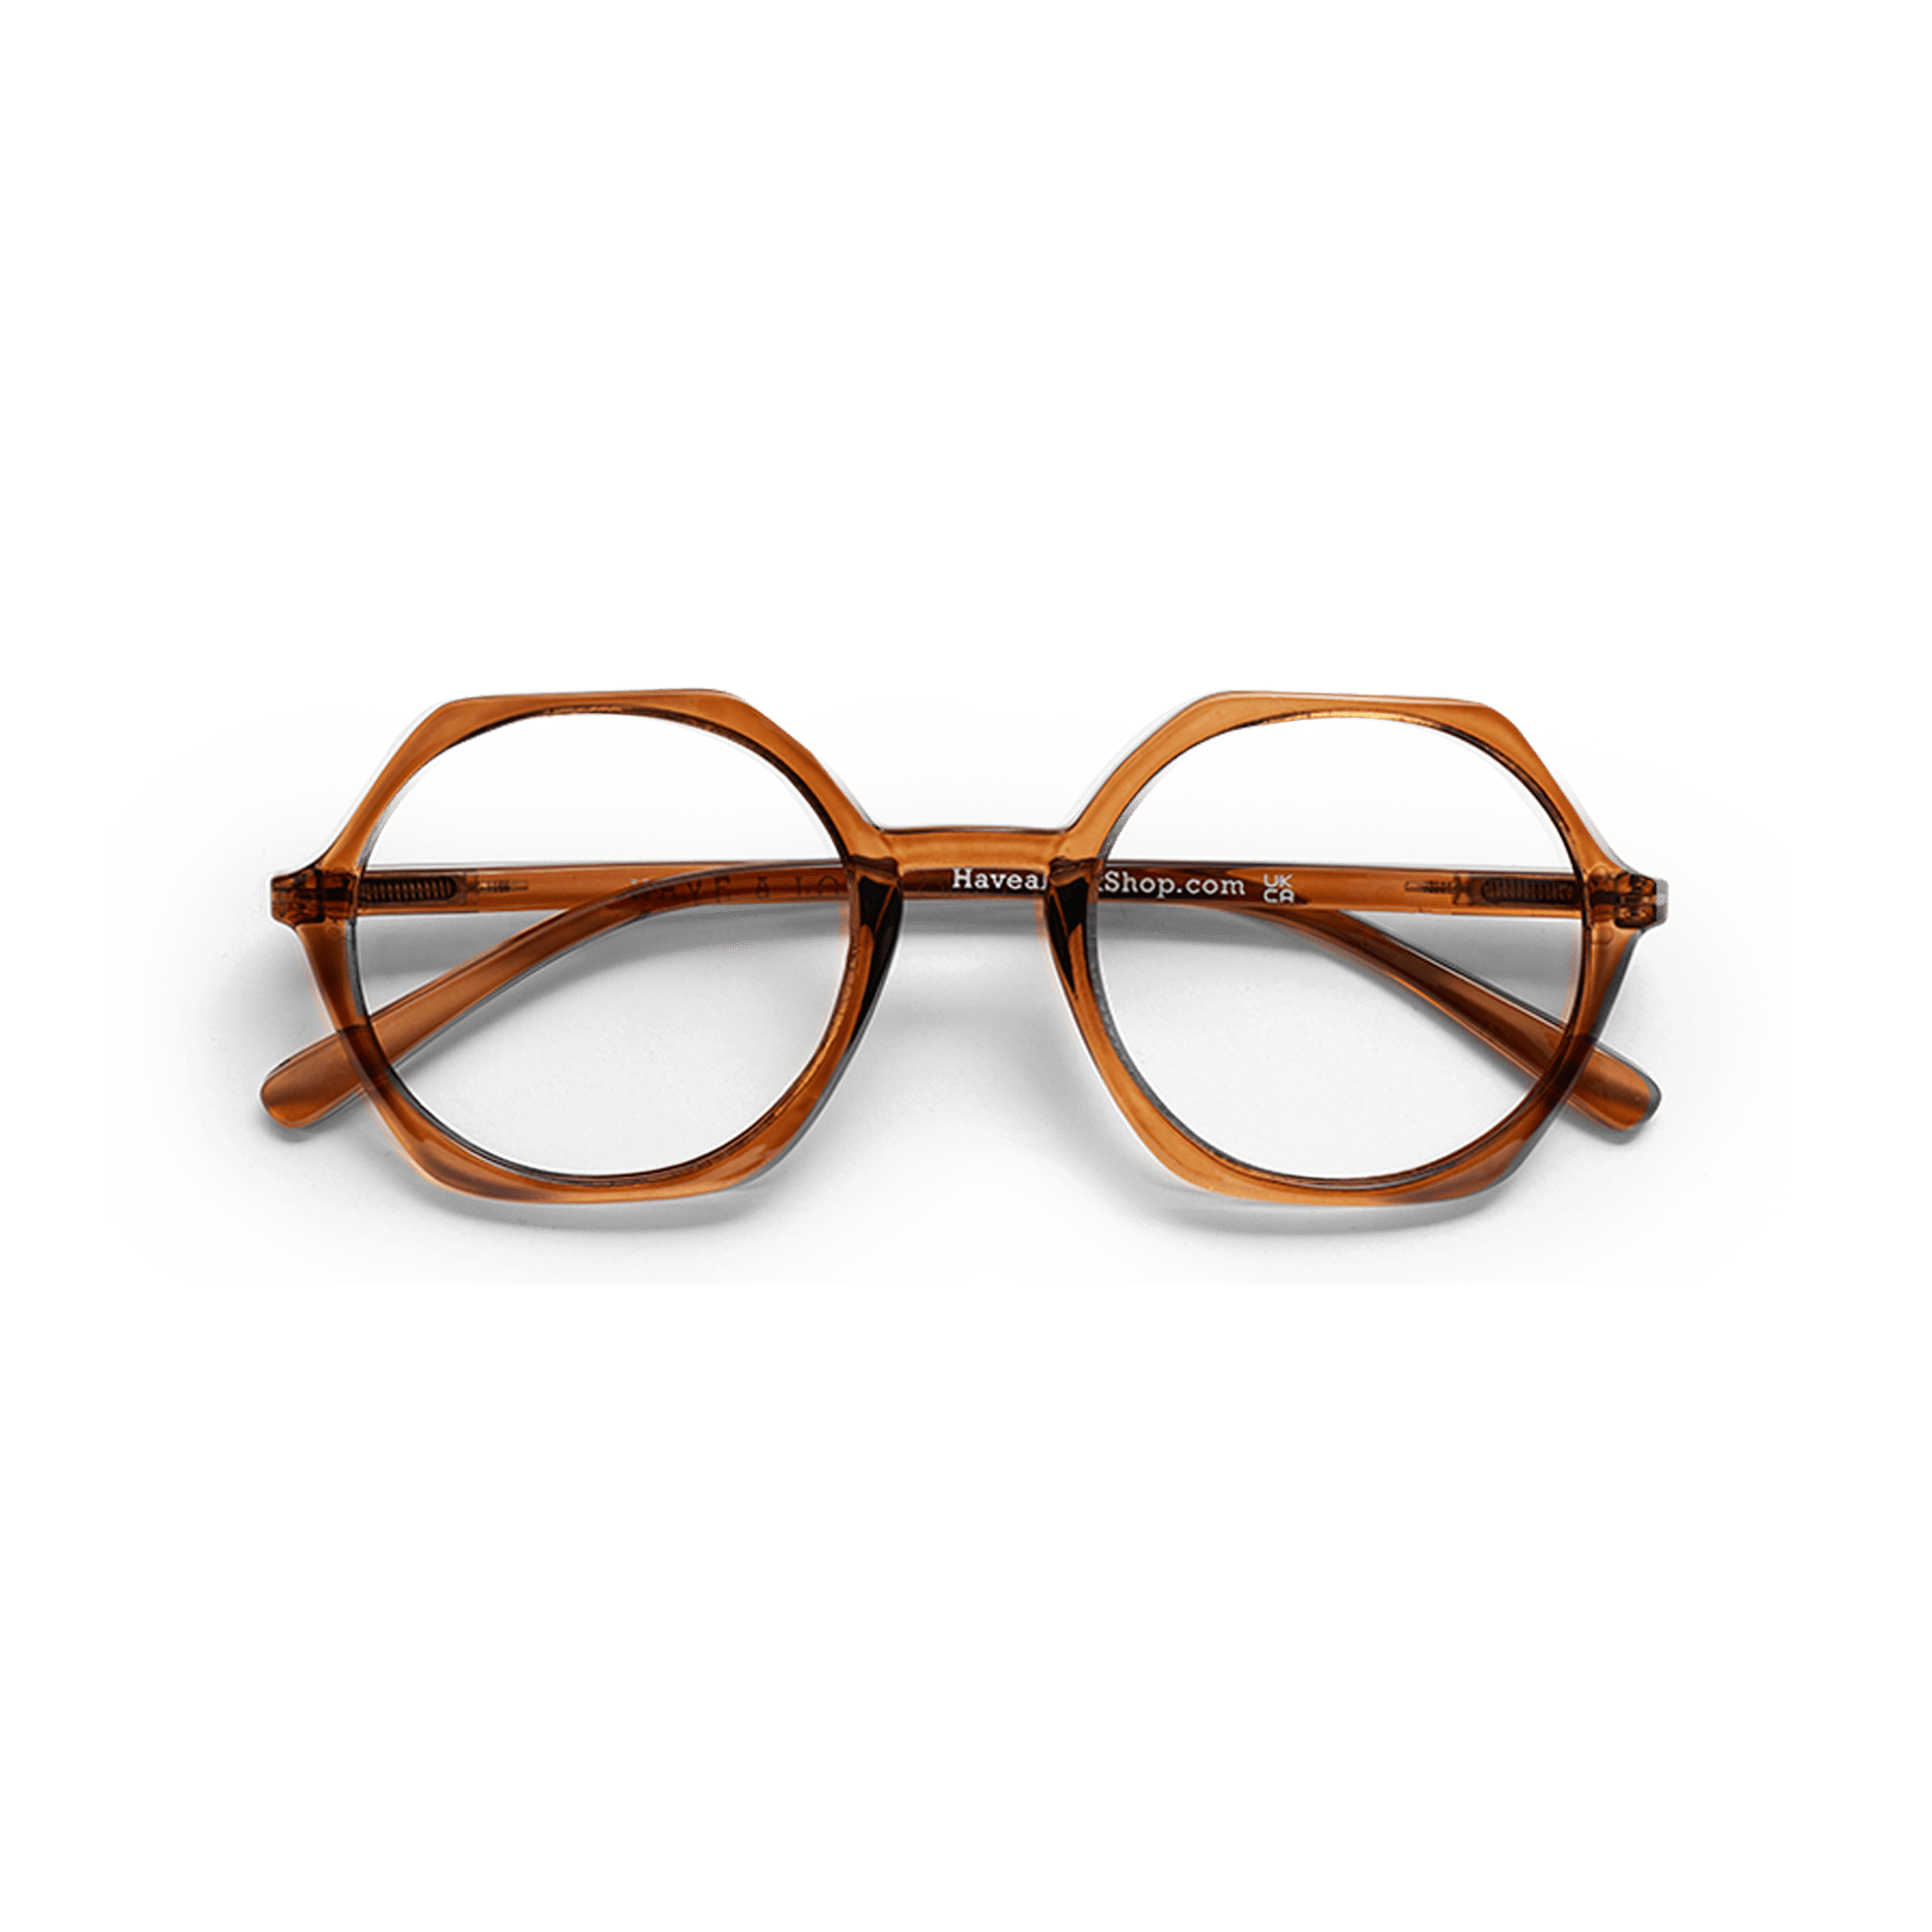 Minusglasögon Edgy - brown